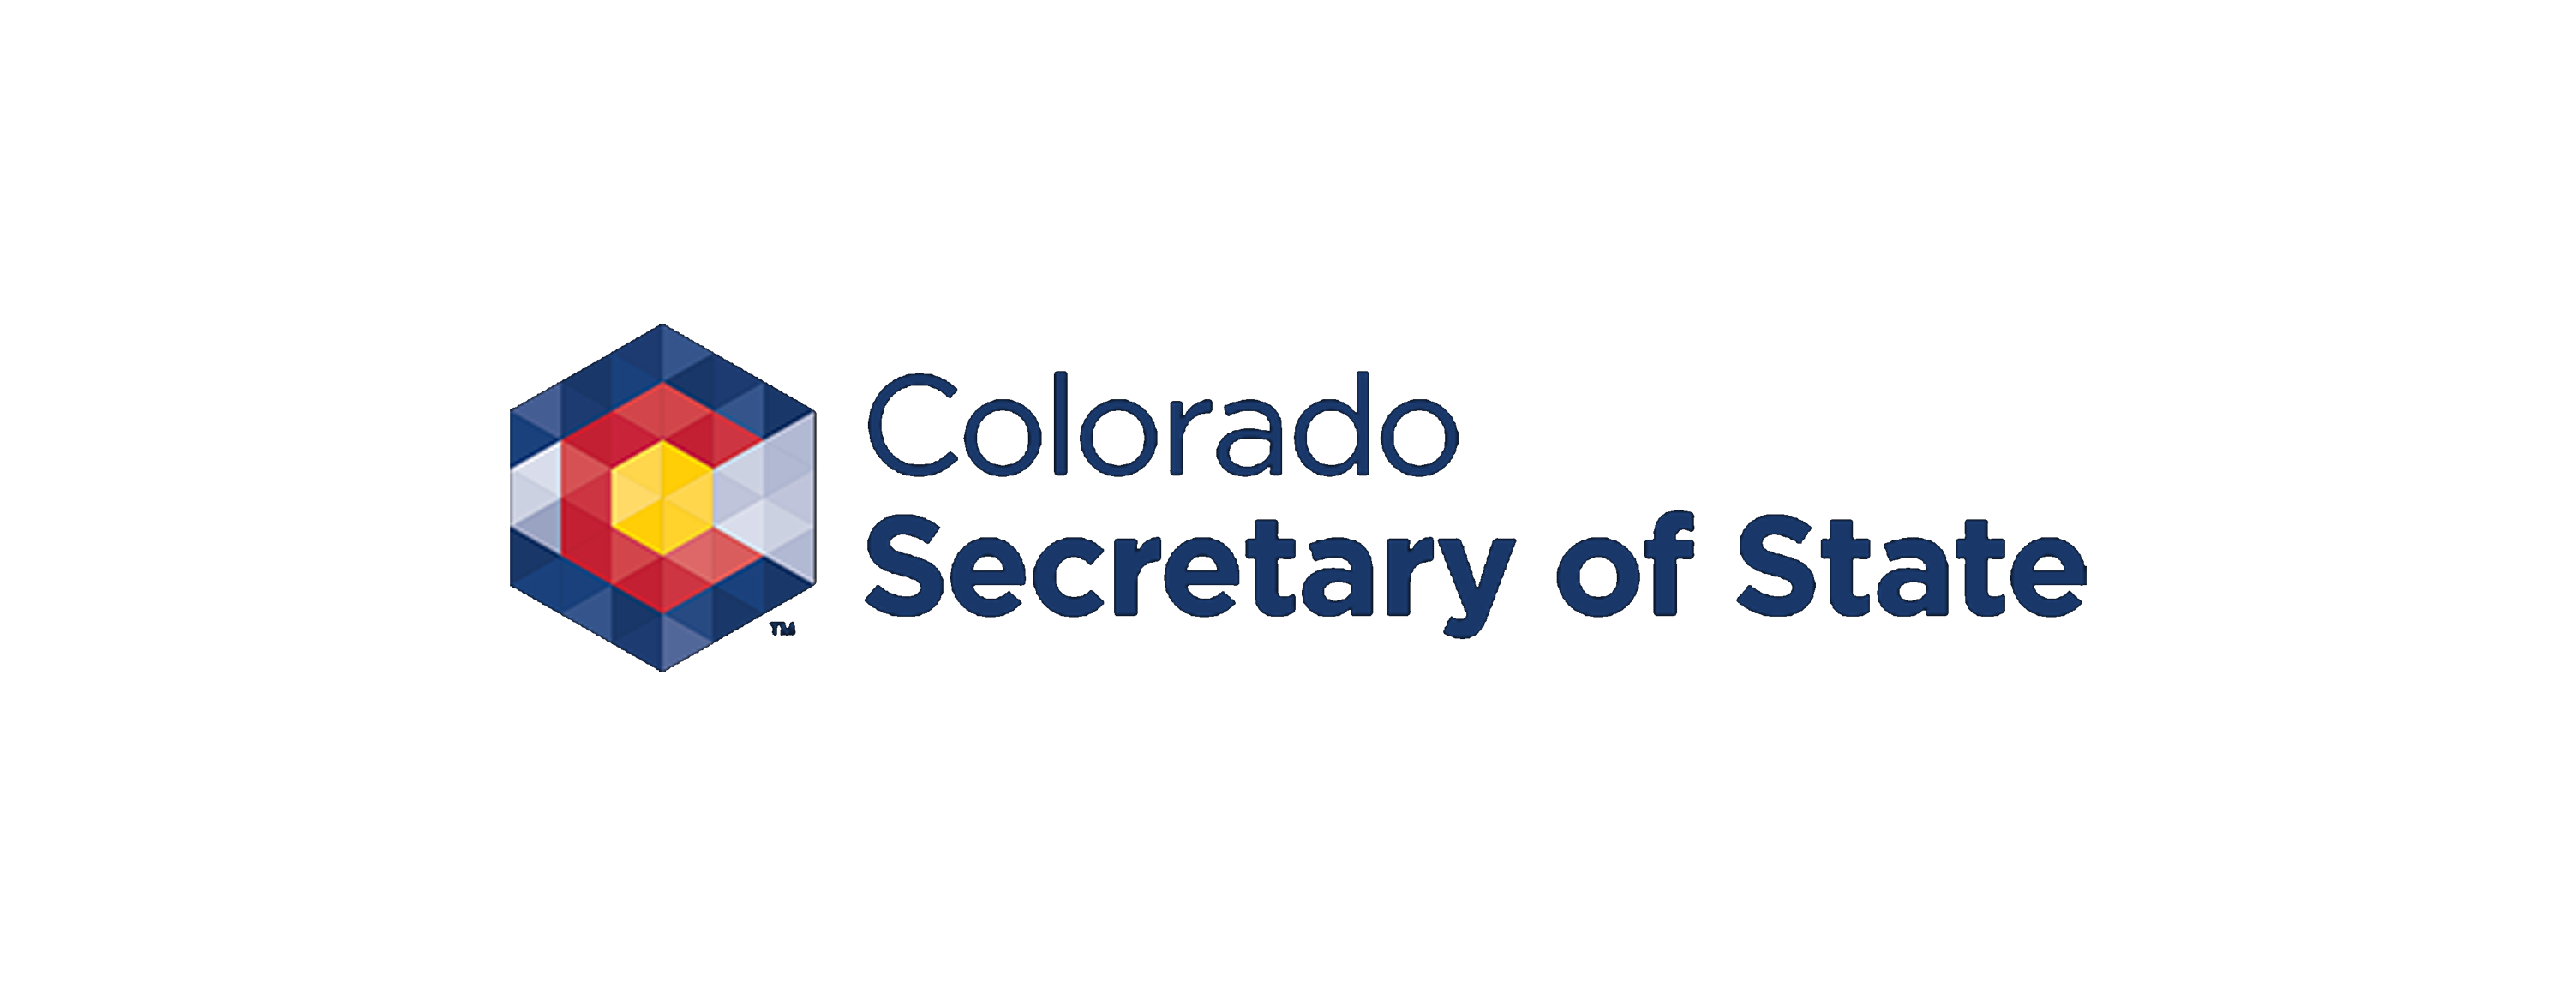 co-secretary-of-state-logo